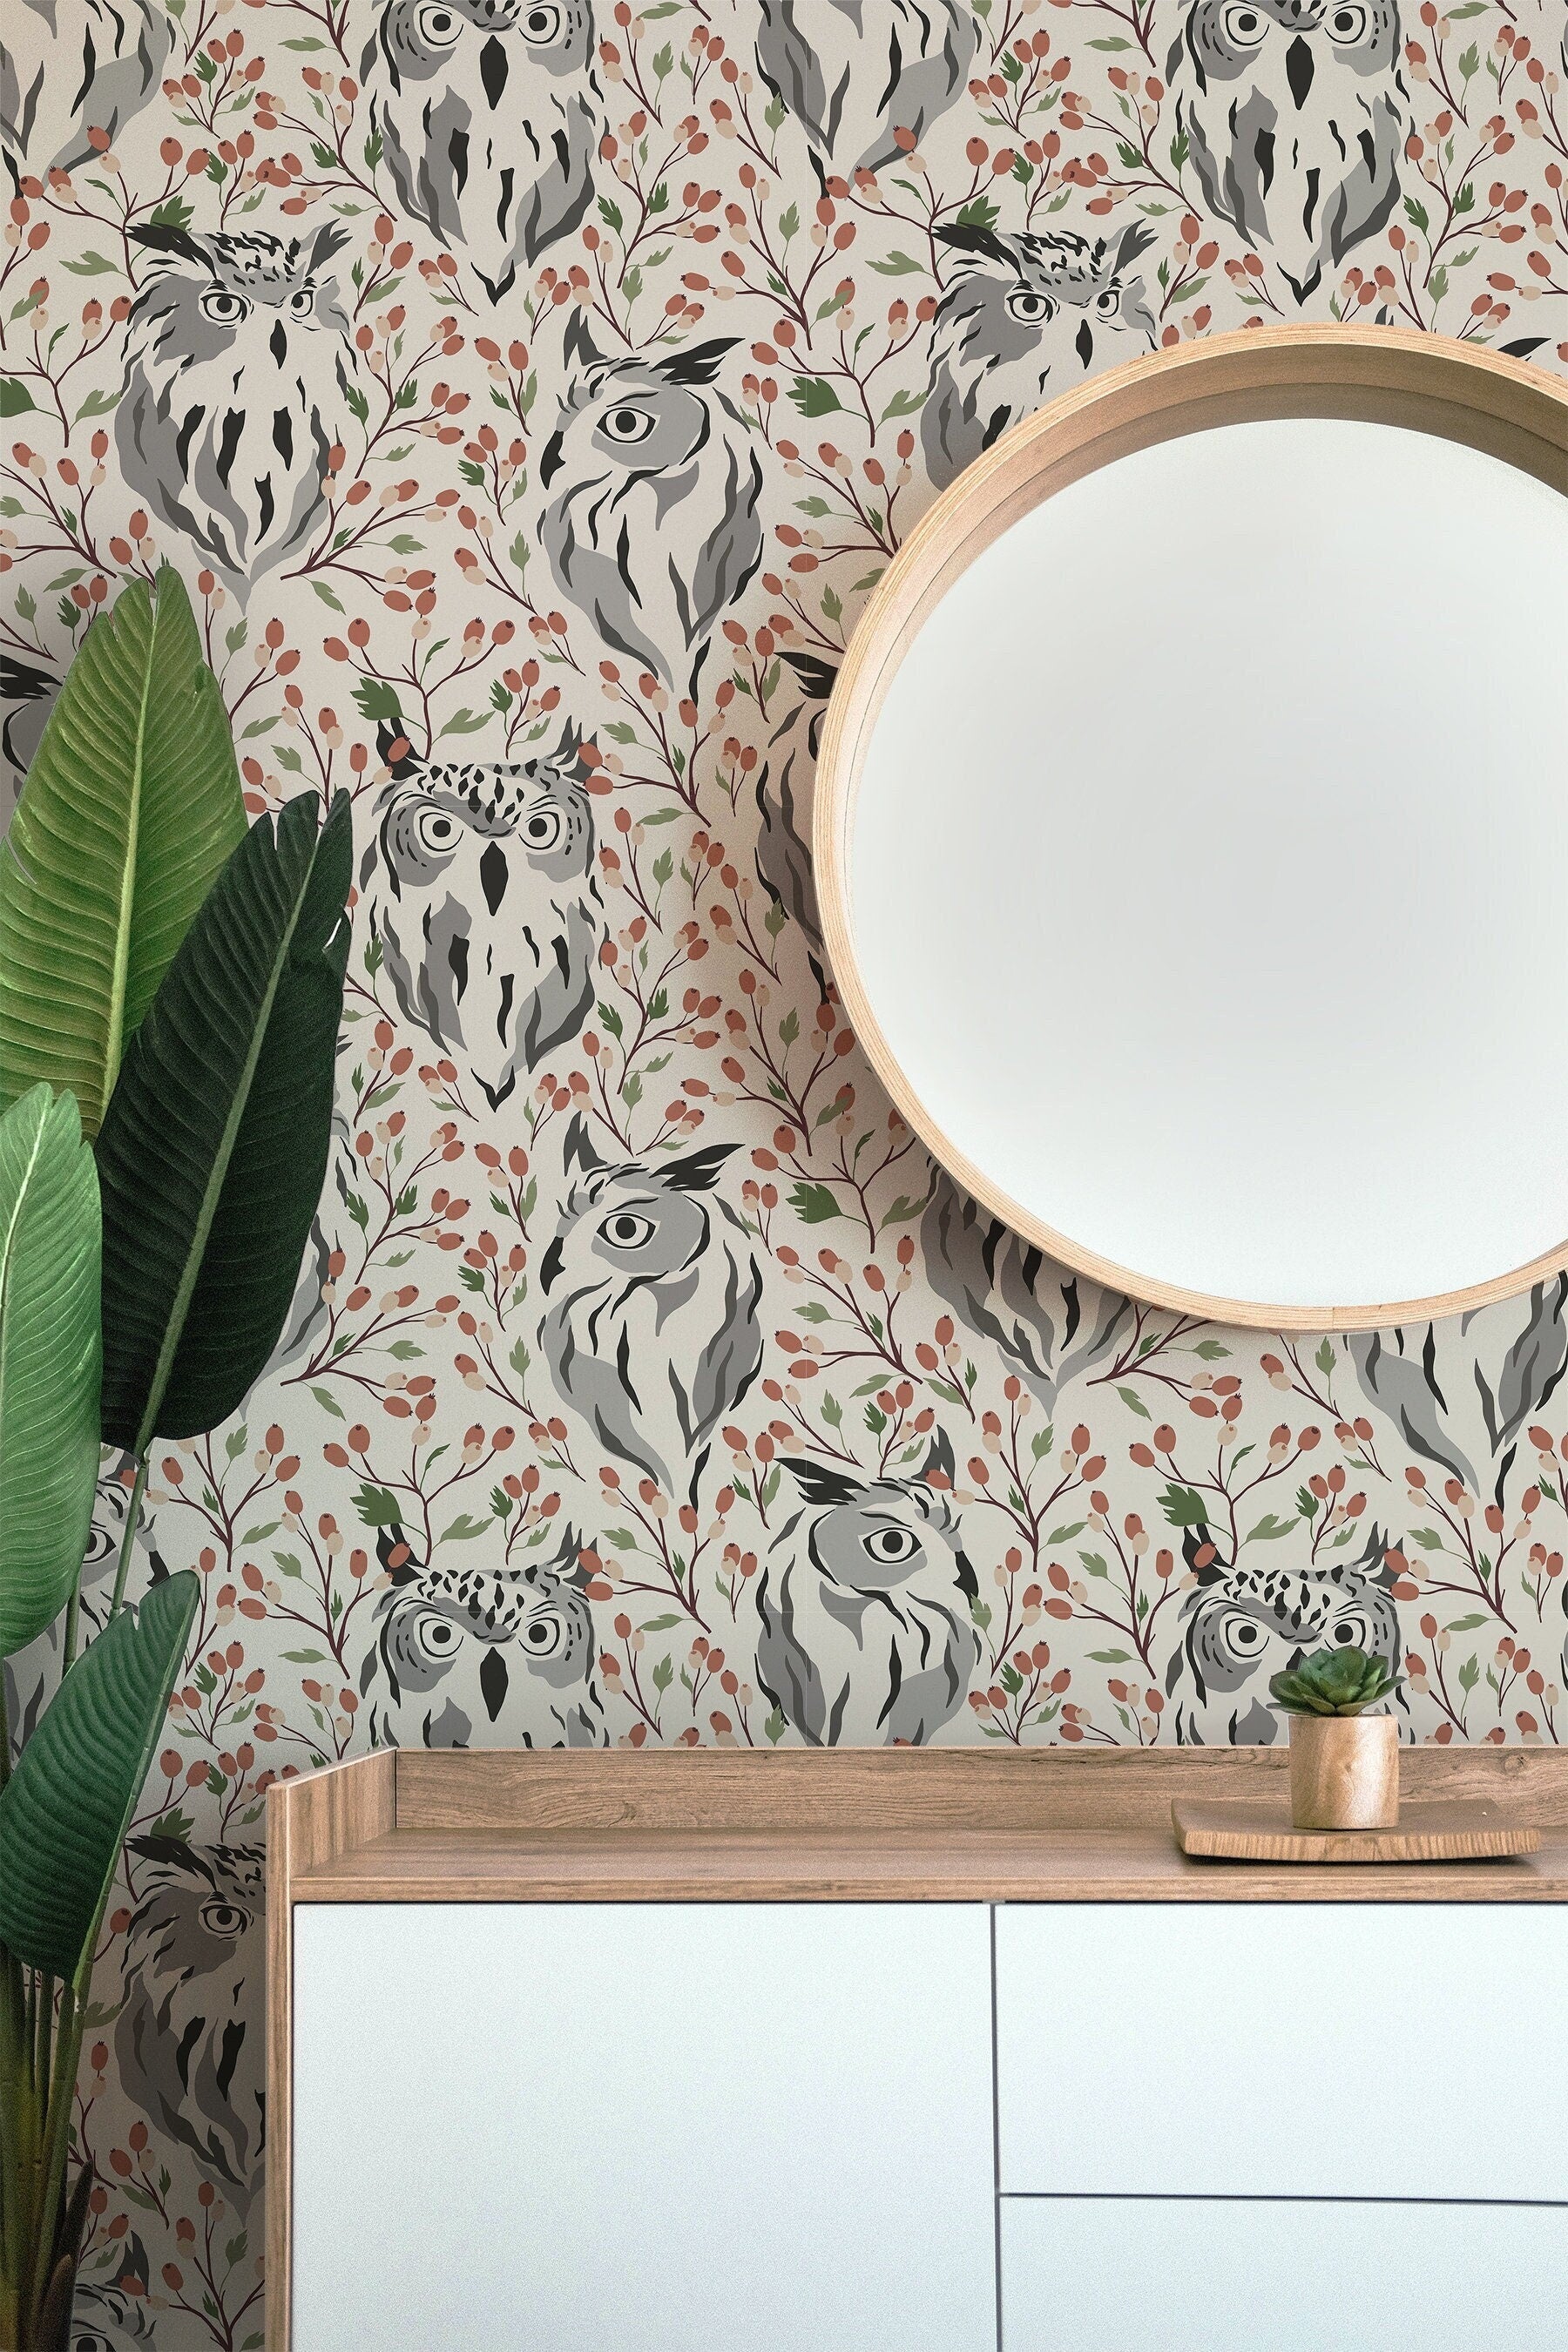 Large Floral Owl Boho Wallpaper | Wallpaper Peel and Stick | Removable Wallpaper | Wall Paper Peel And Stick | Wall Mural Wall Decor 135 - JamesAndColors